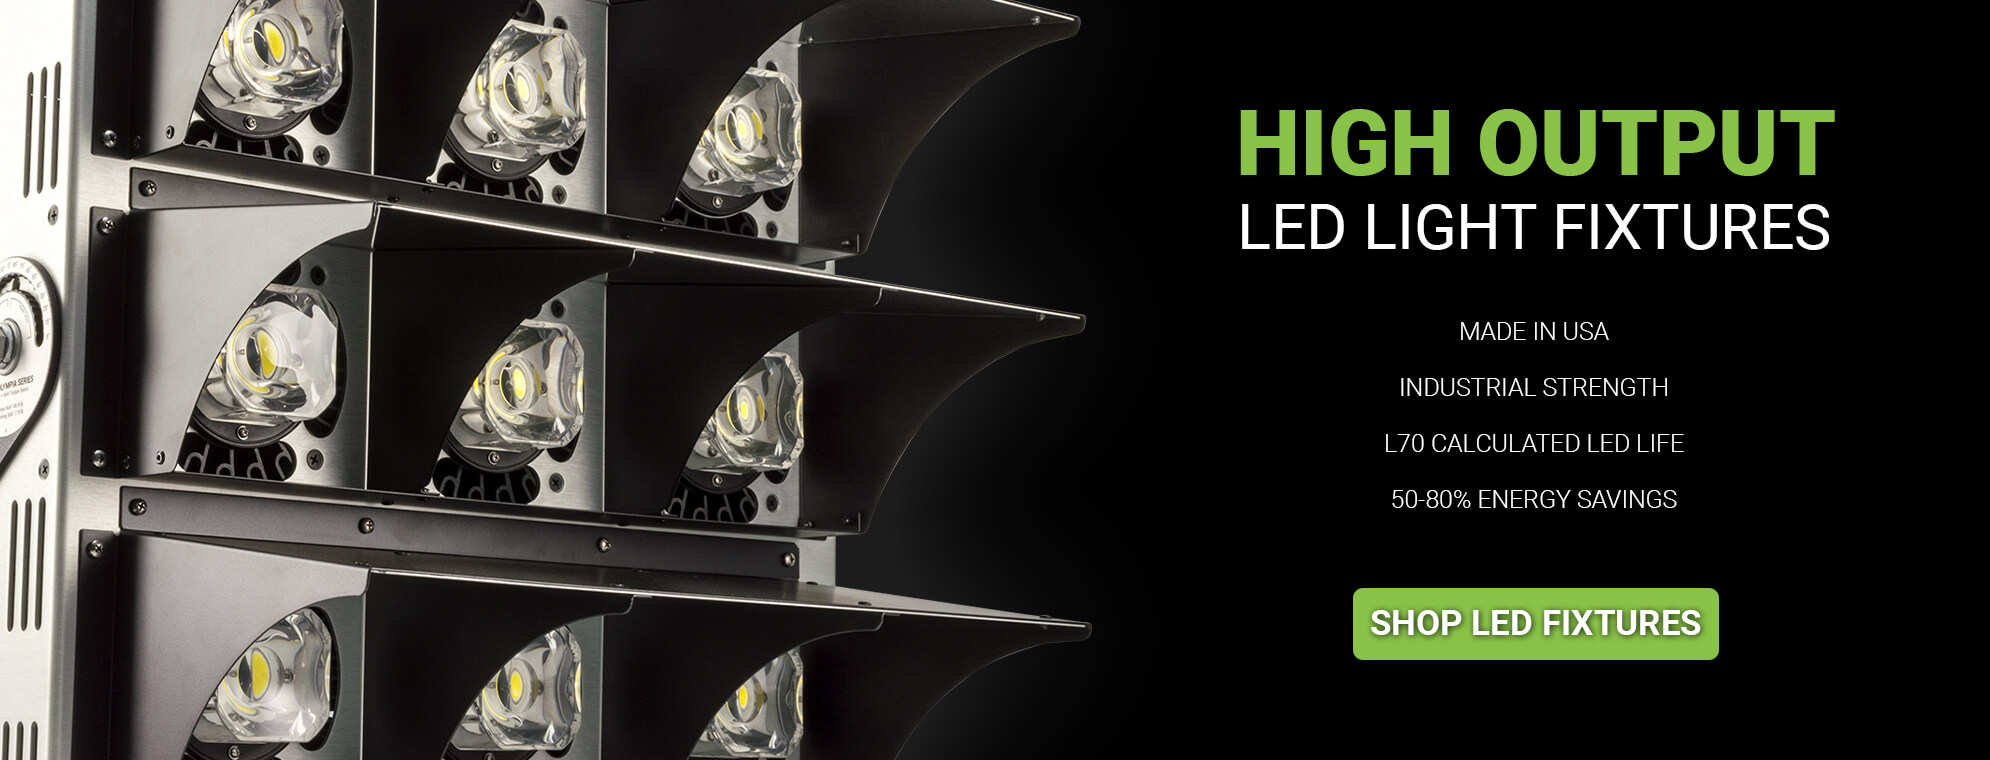 High Output LED Light Fixtures